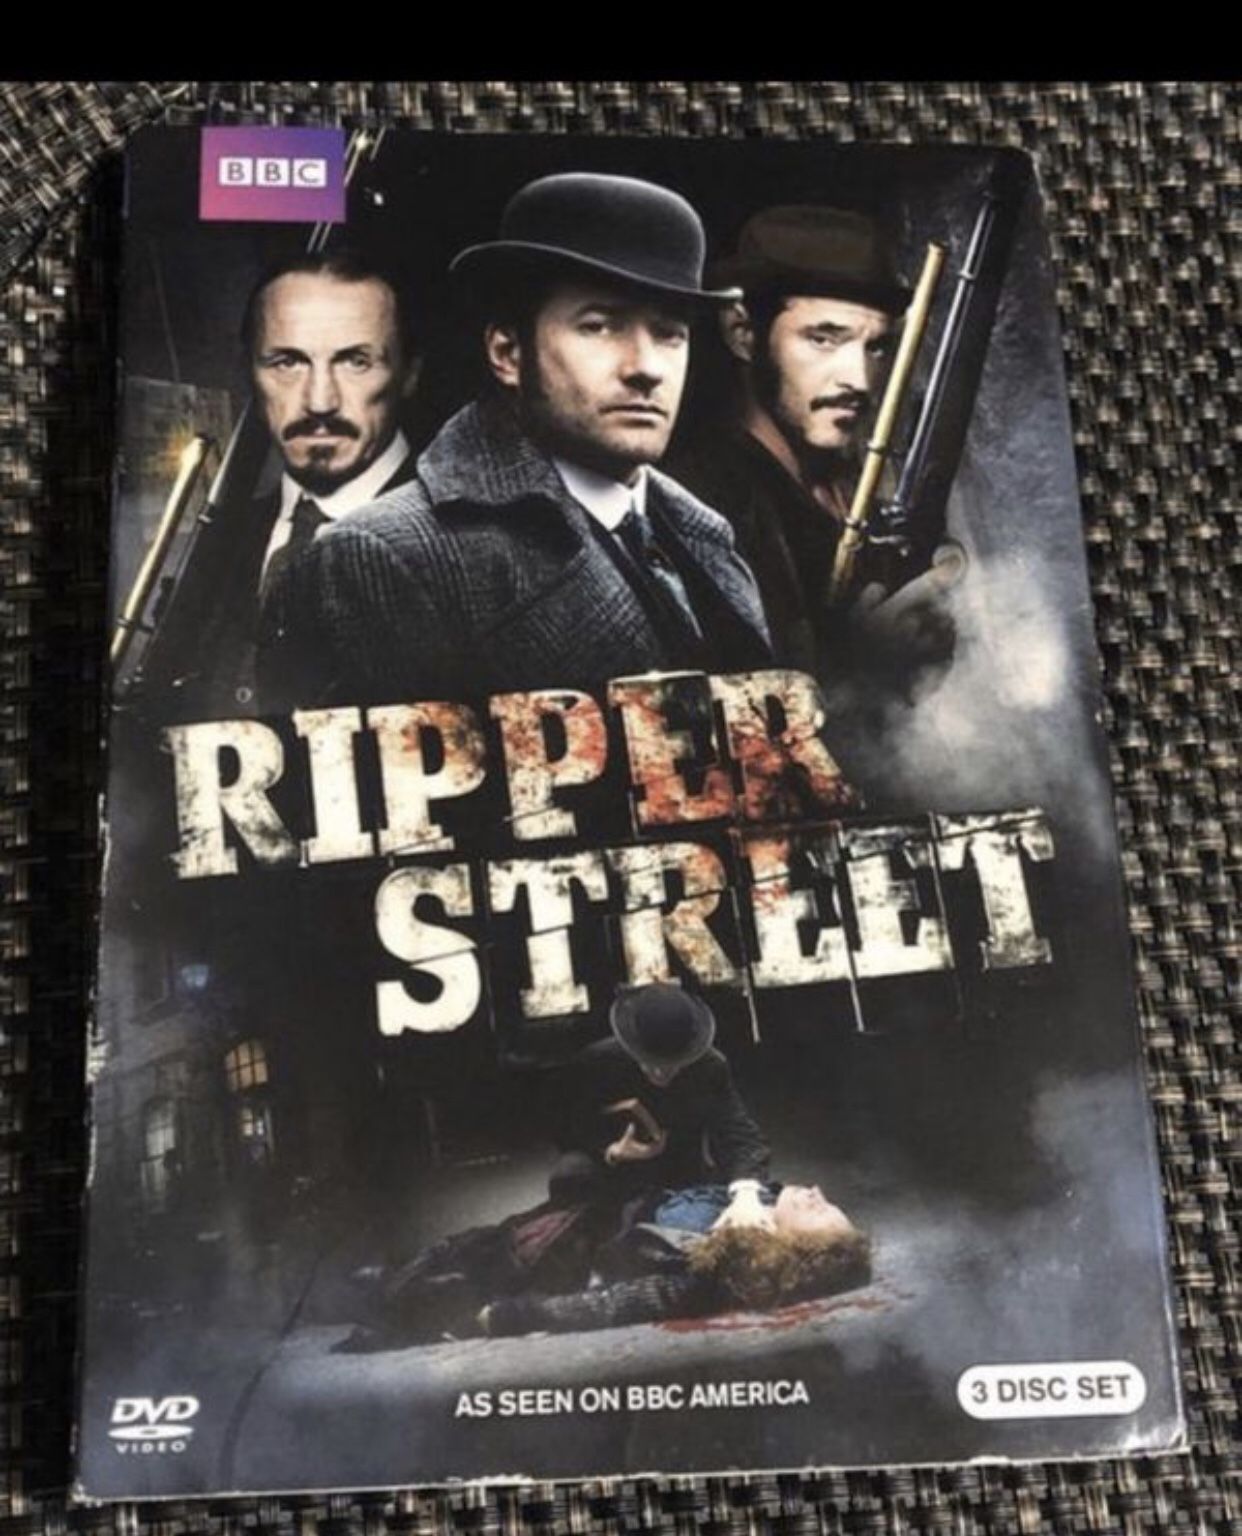 RIPPER STREET (season 1-2)